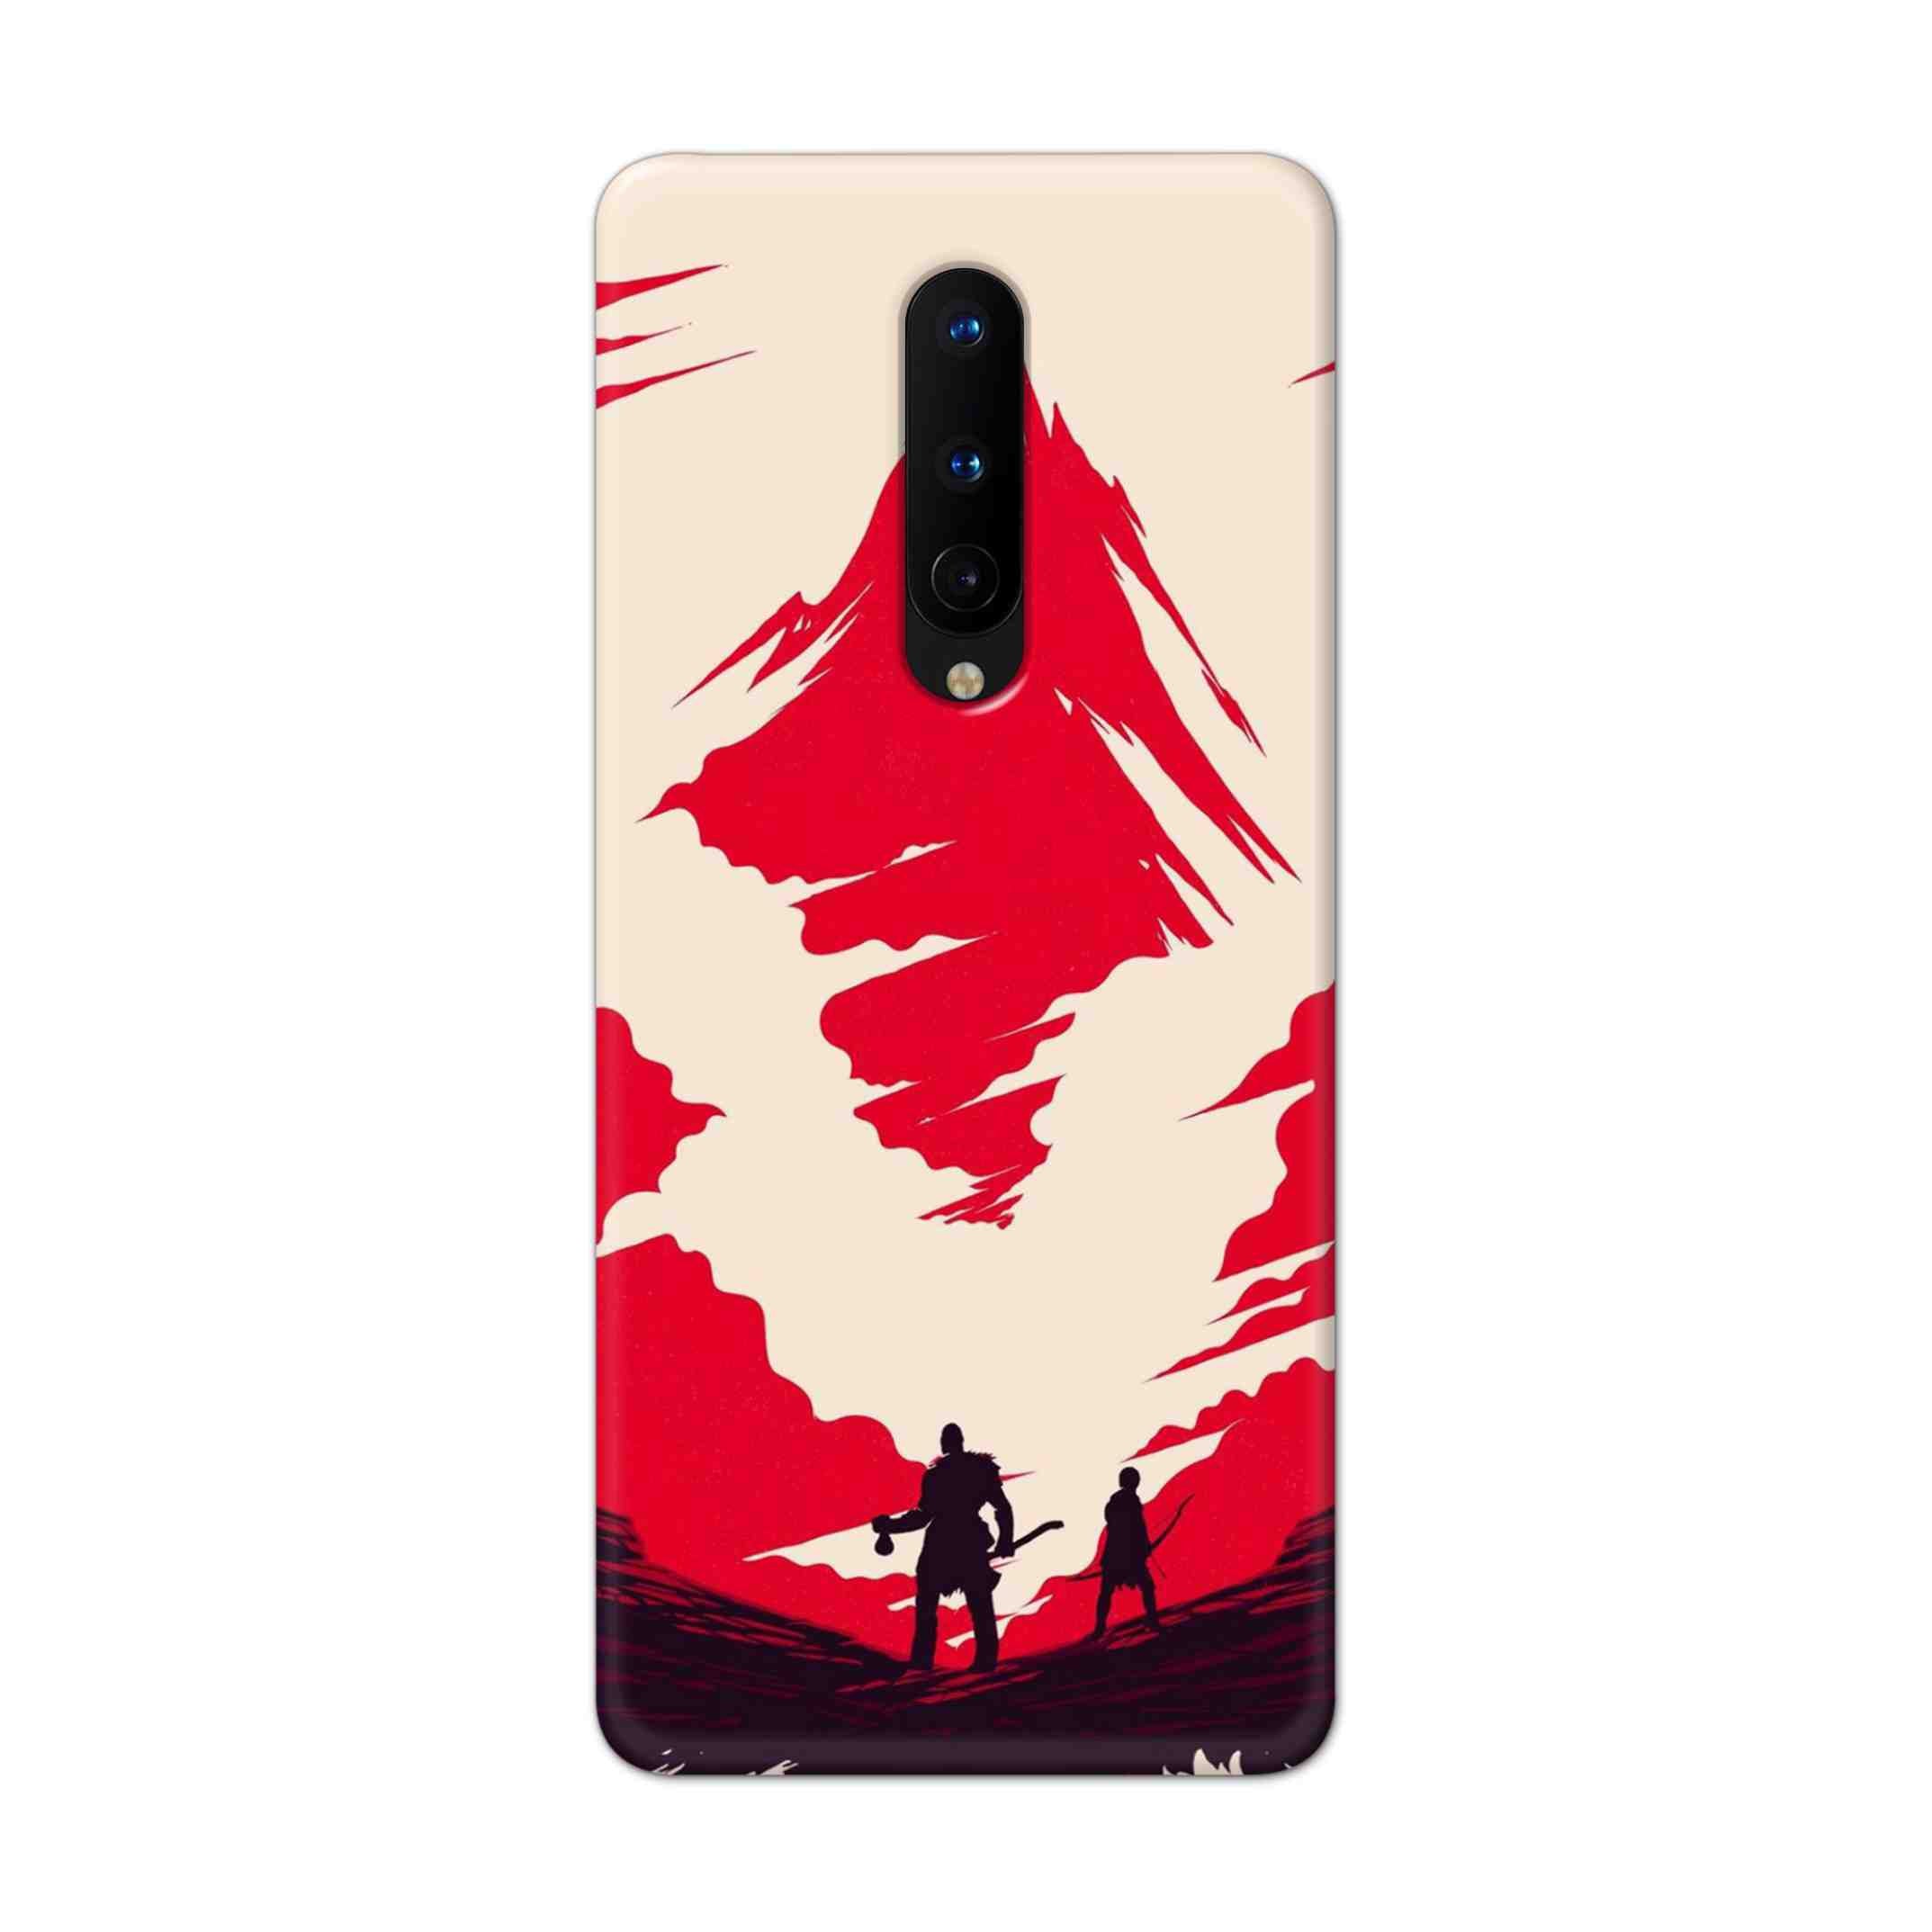 Buy God Of War Art Hard Back Mobile Phone Case Cover For OnePlus 8 Online